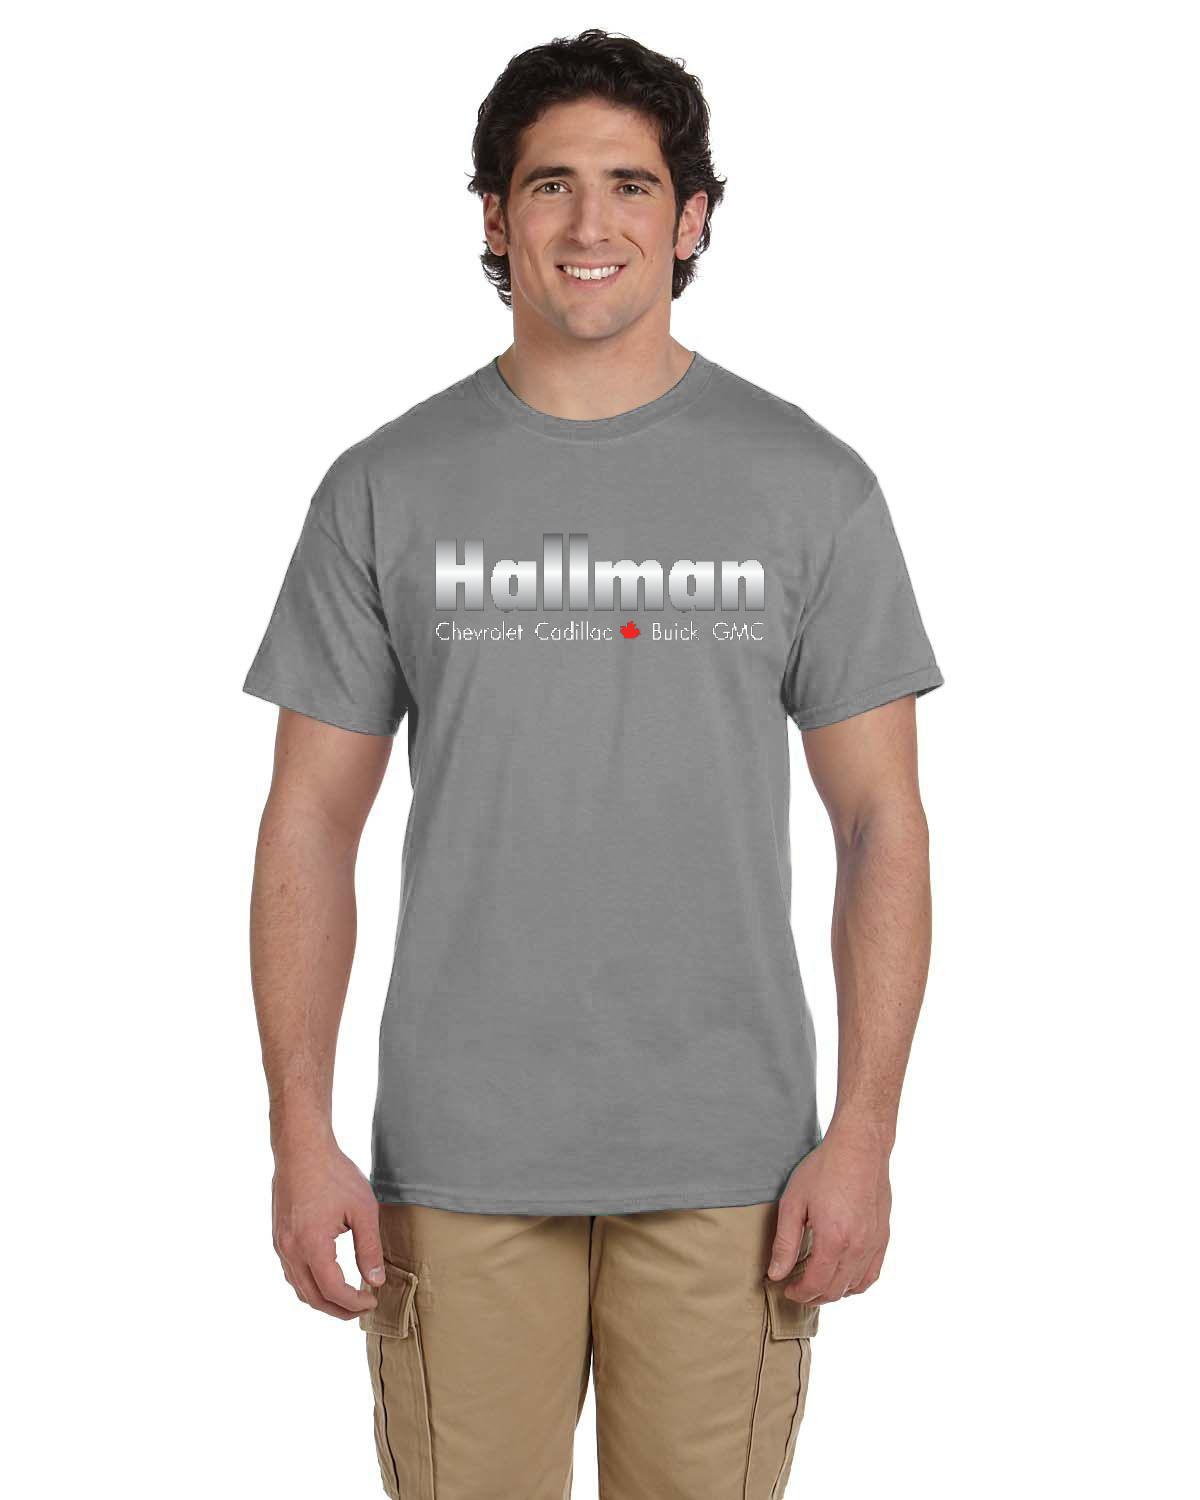 Hallman Men's T-Shirt